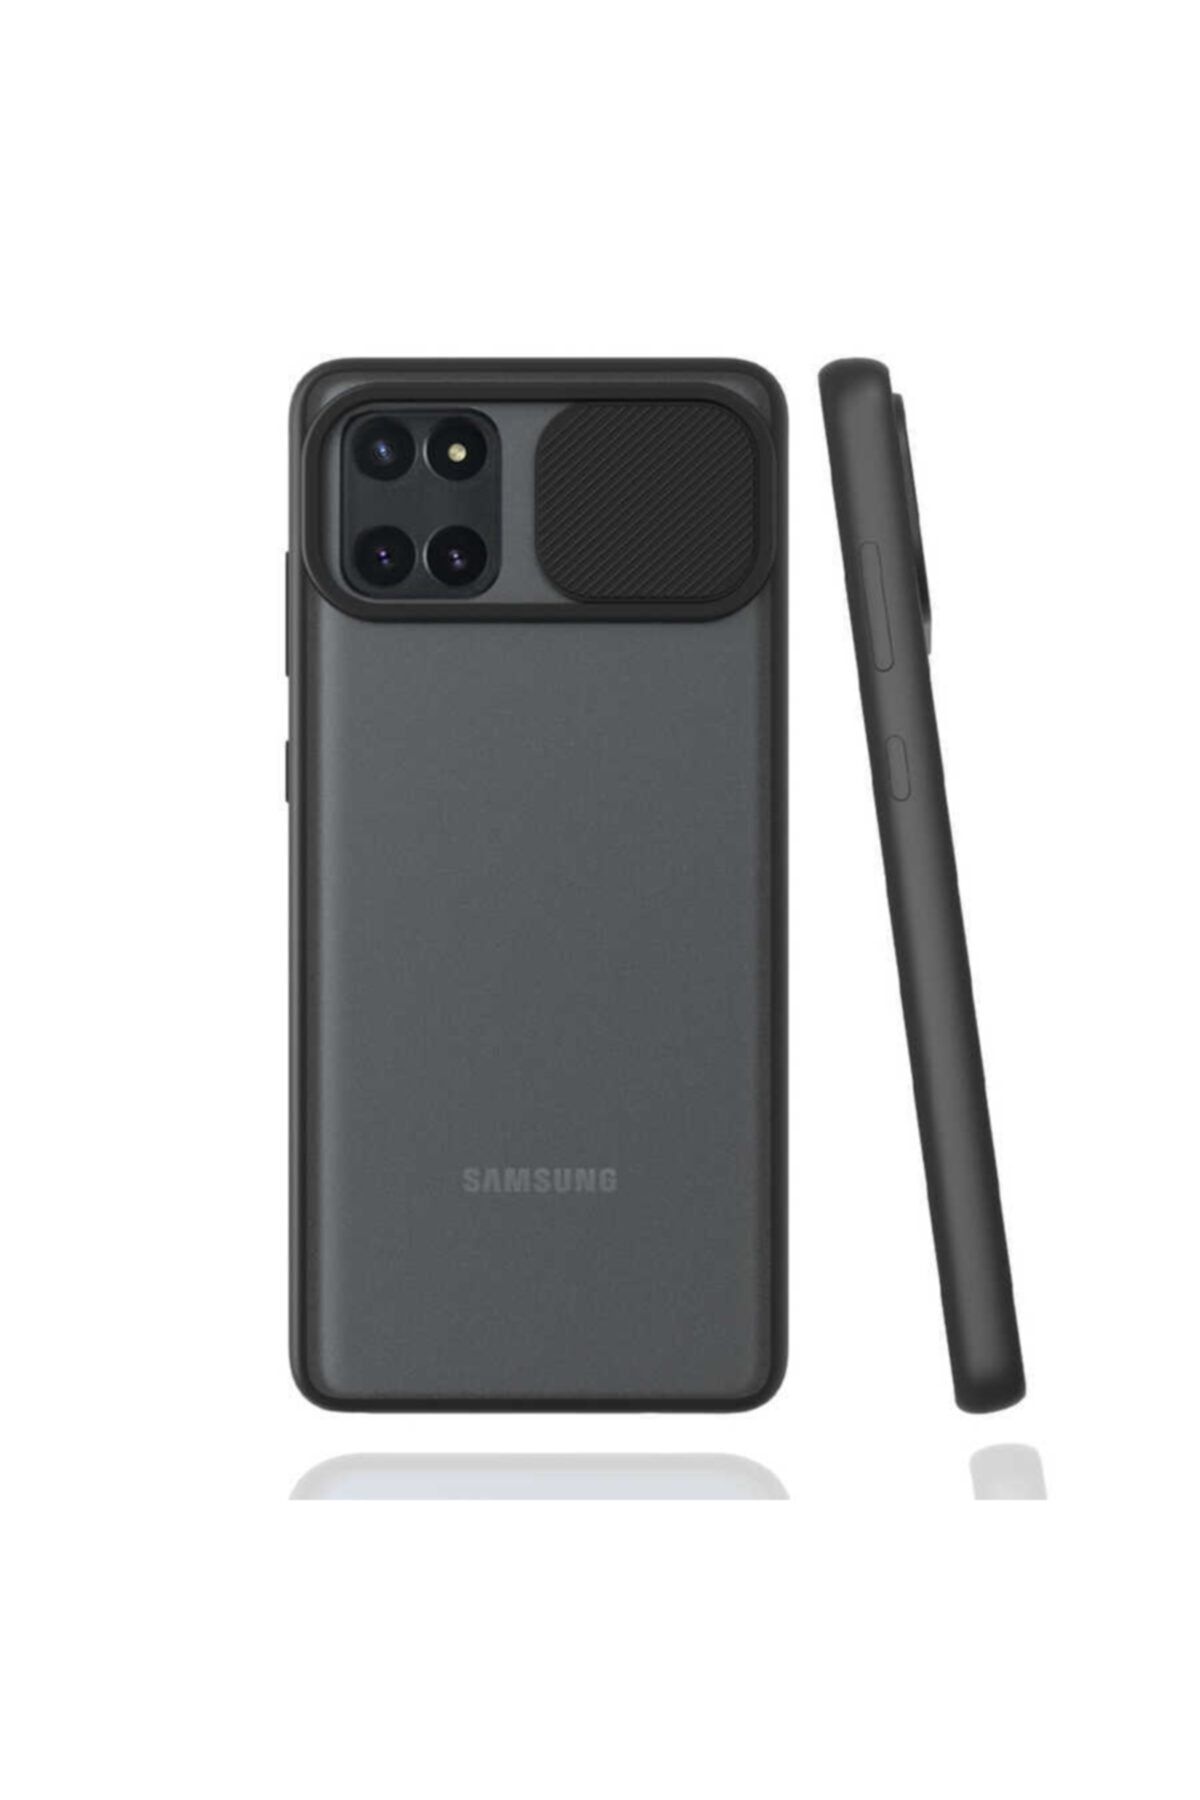 Fibaks Galaxy Note 10 Lite Uyumlu Kılıf Slayt Kaydırmalı Kamera Korumalı Renkli Silikon Kılıf